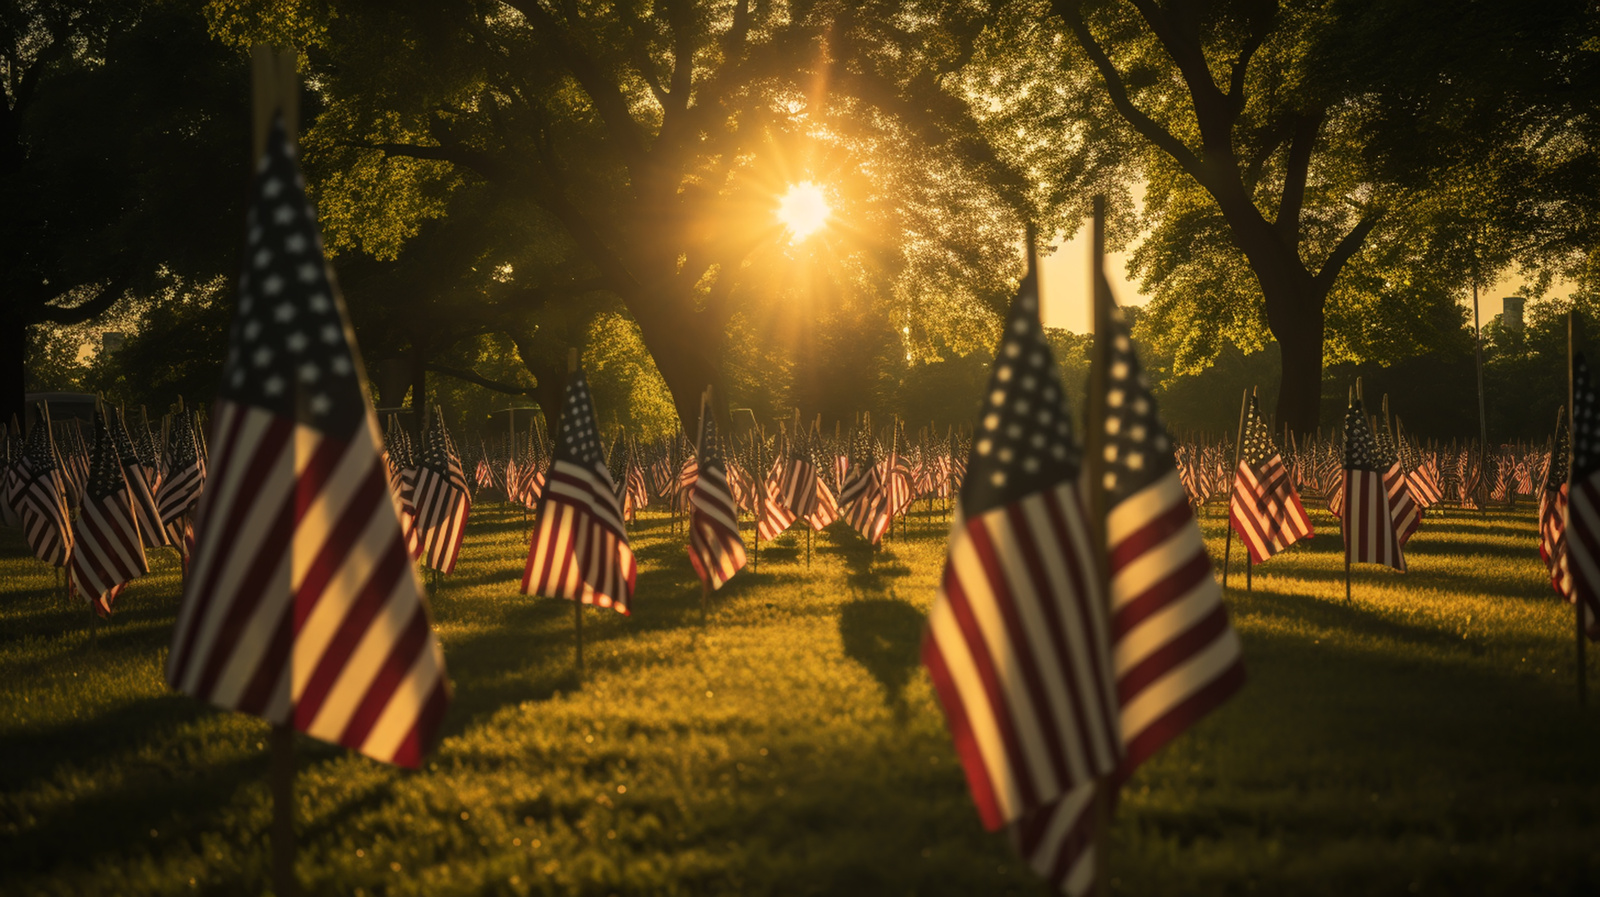 american flag on cemetery